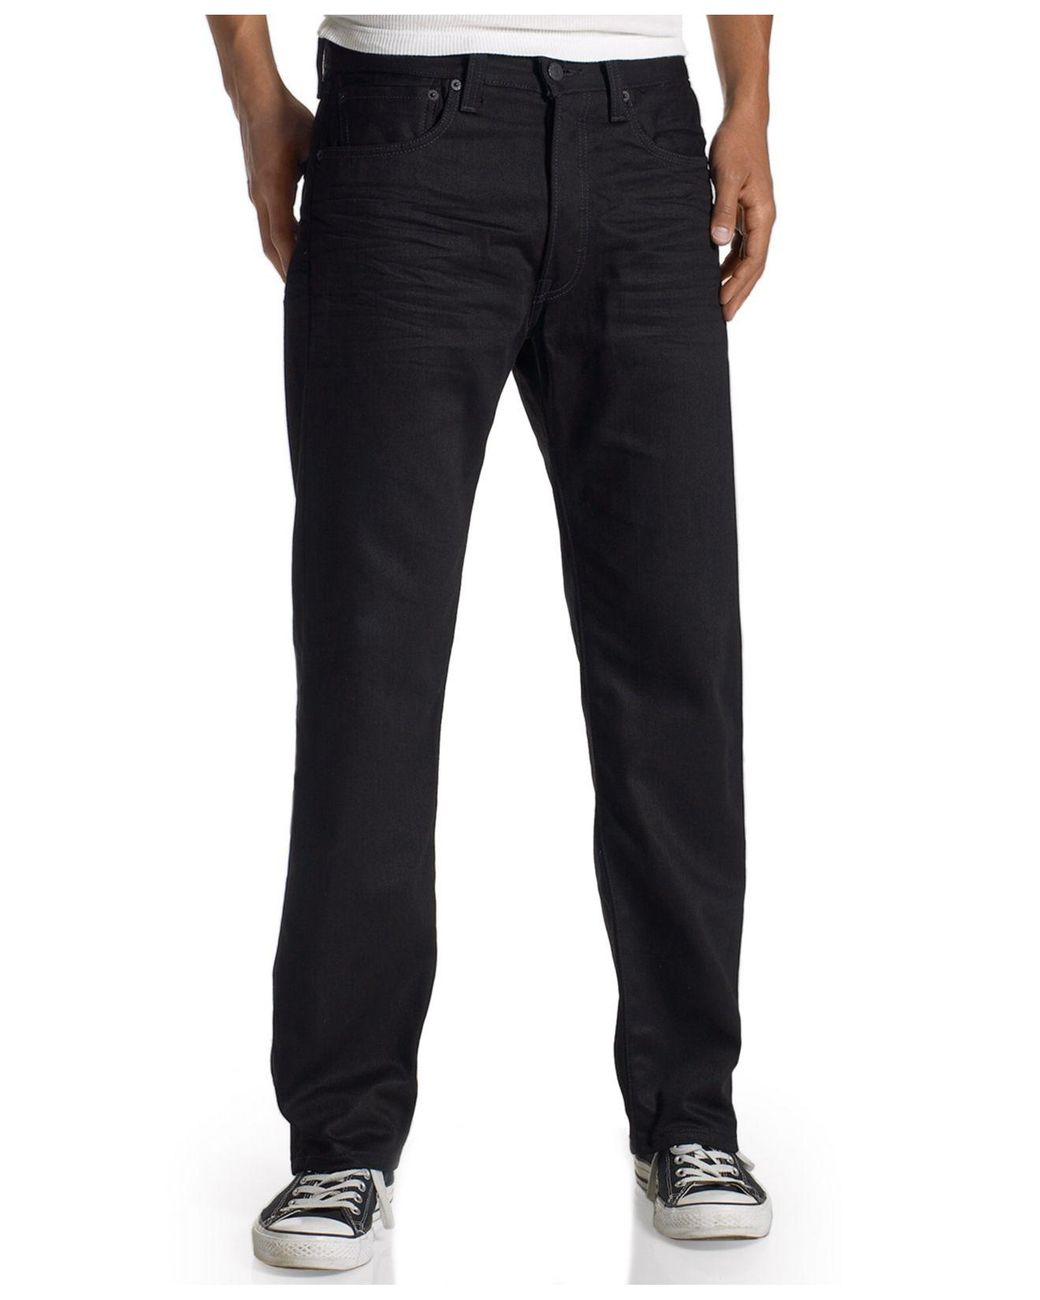 Lyst - Levi's 501 Original-fit Jeans in Black for Men